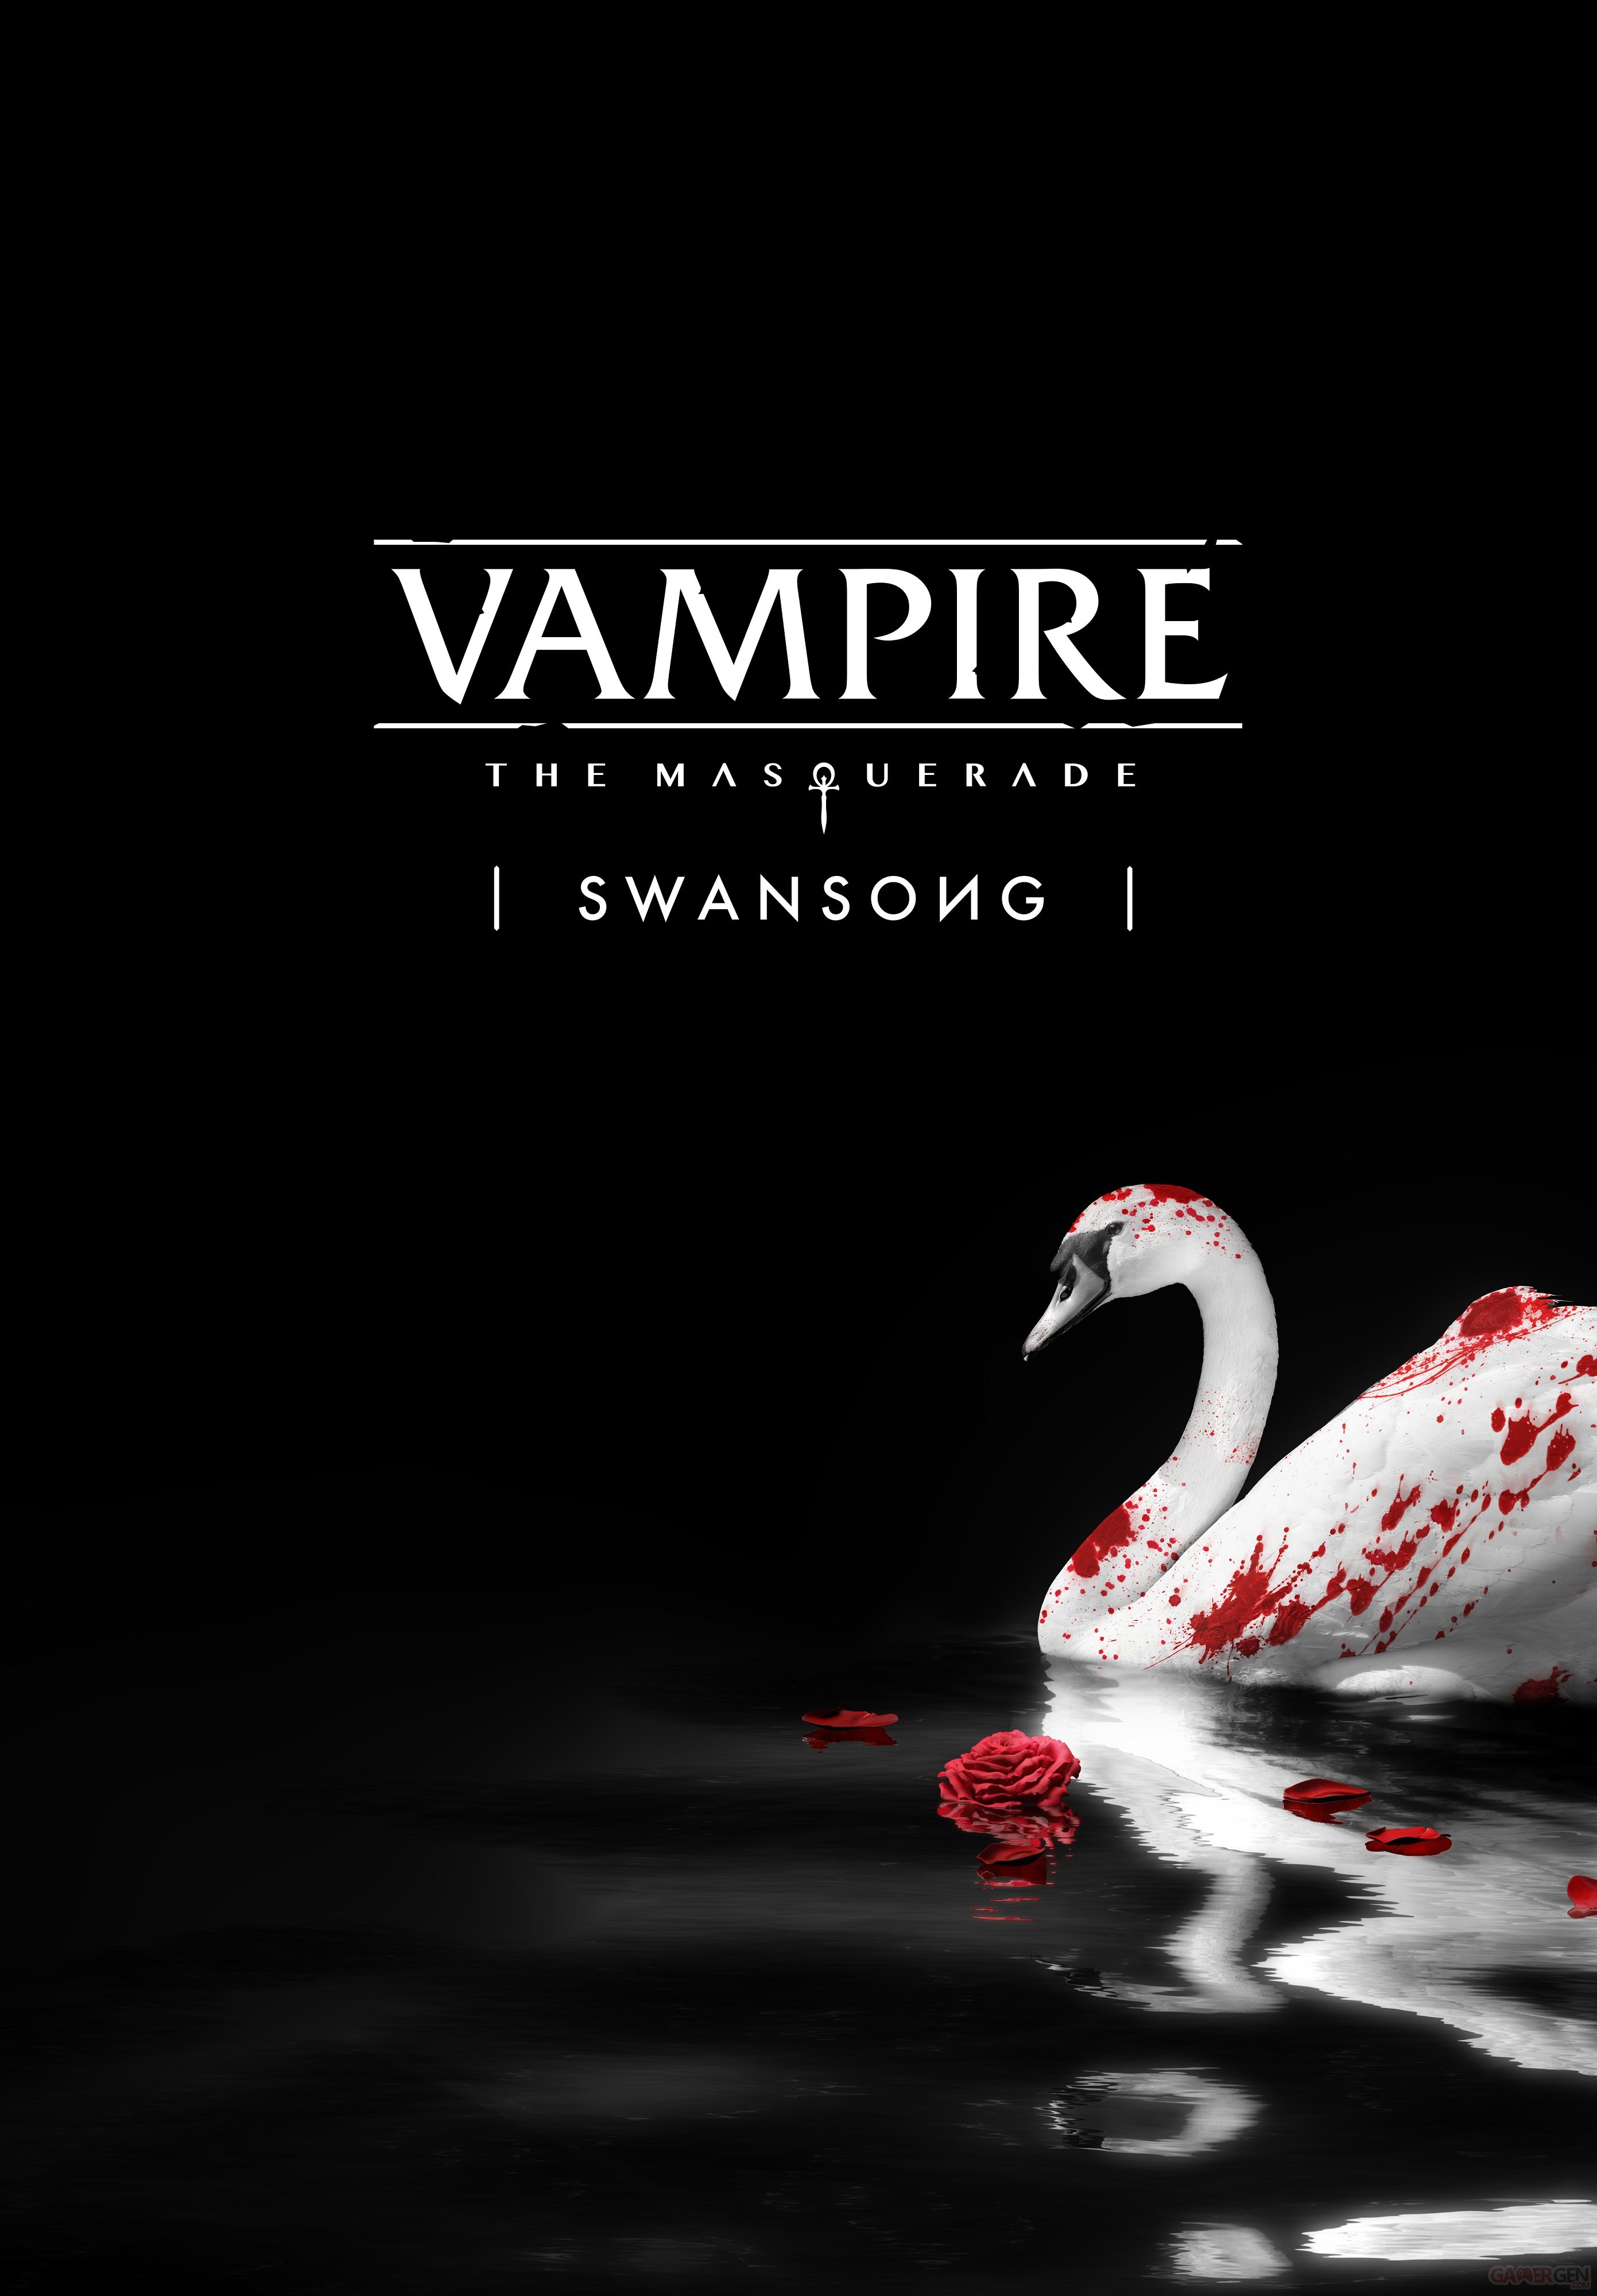 Vampire: The Masquerade – Swansong instaling